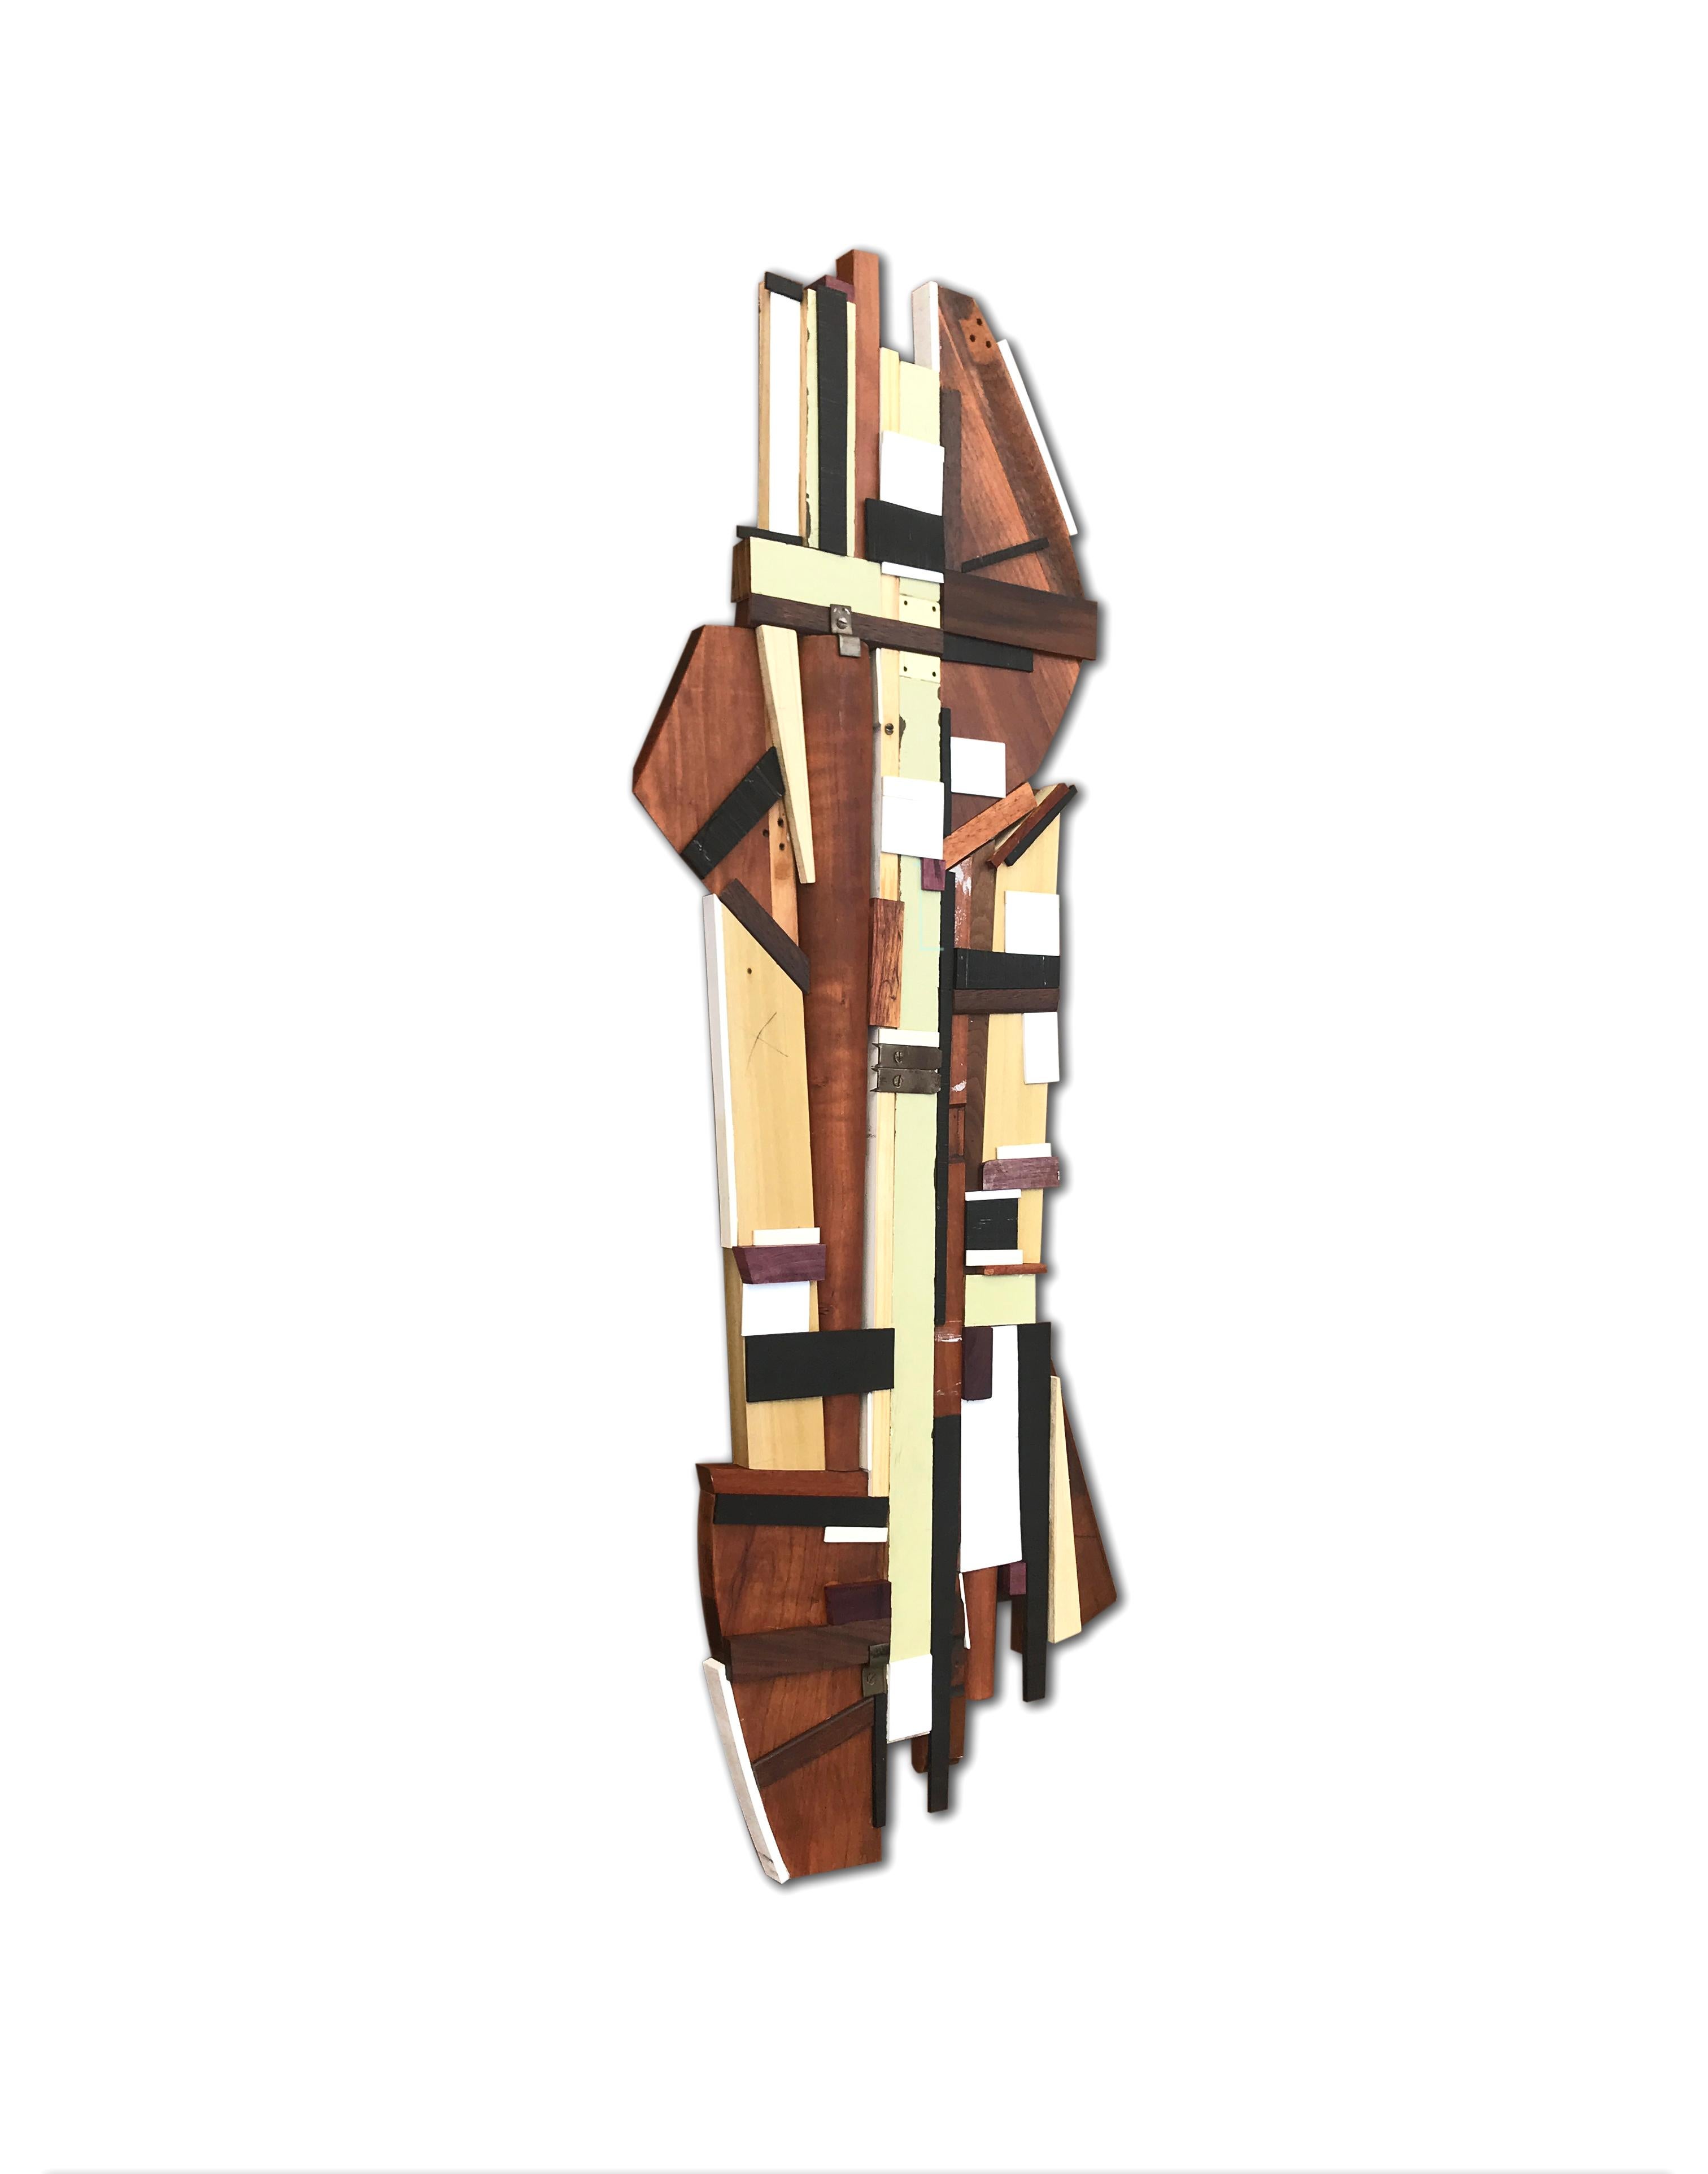 Dechamp (modern abstract wall sculpture natural wood geometric design neutrals) - Painting by Scott Troxel